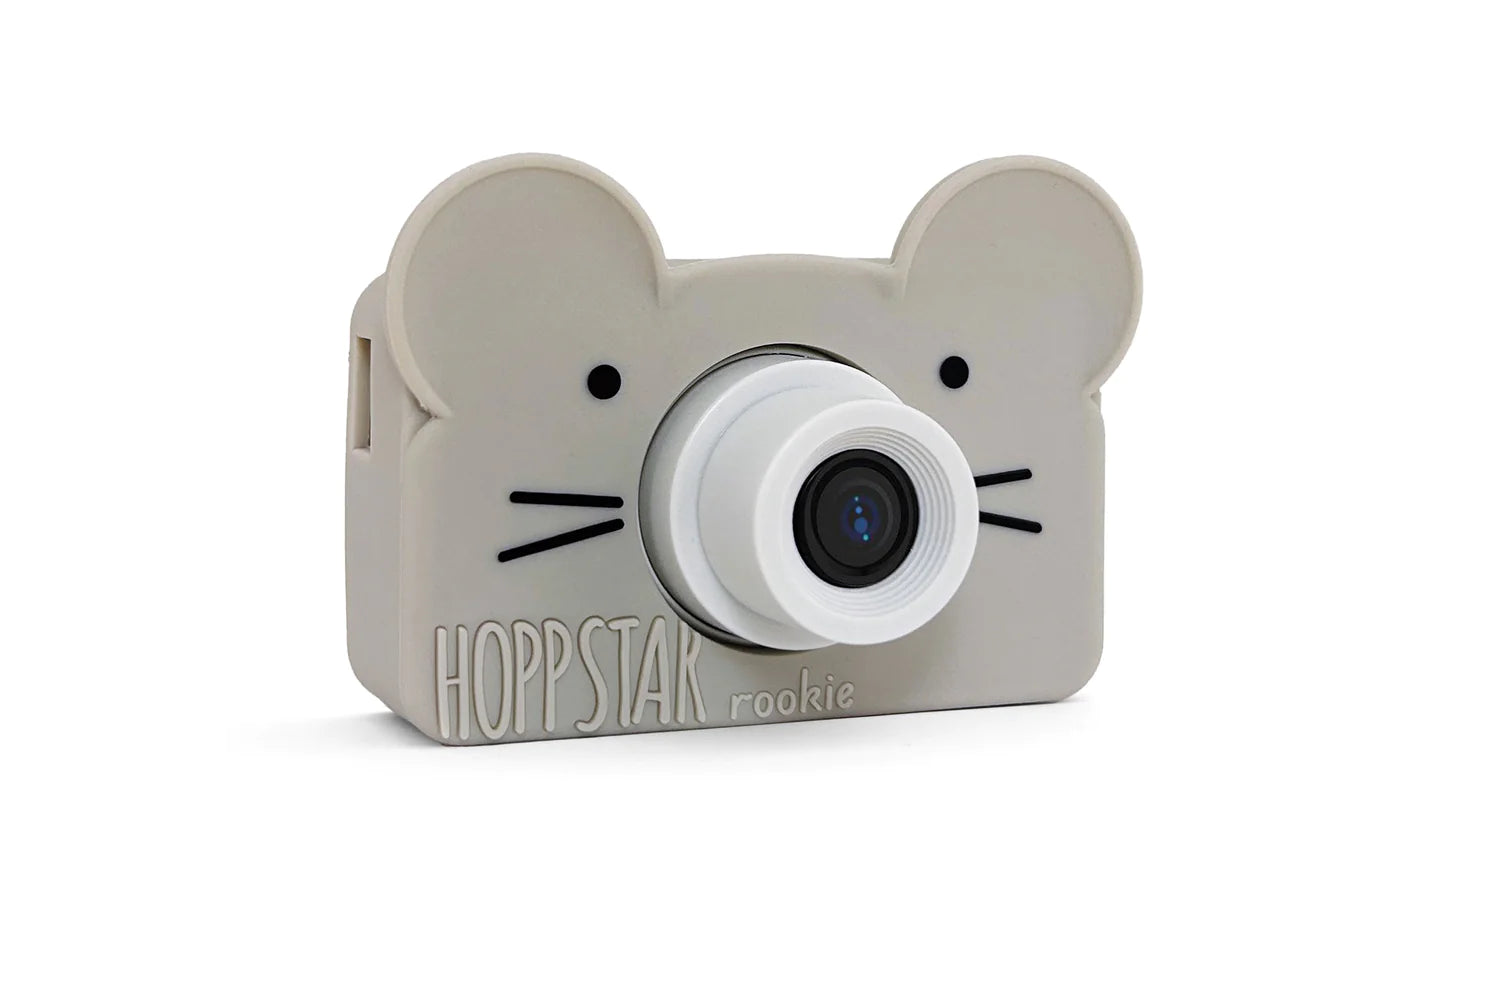 Curolletes - Cámara Fotos Digital para niños Rookie Honey Hoppstar